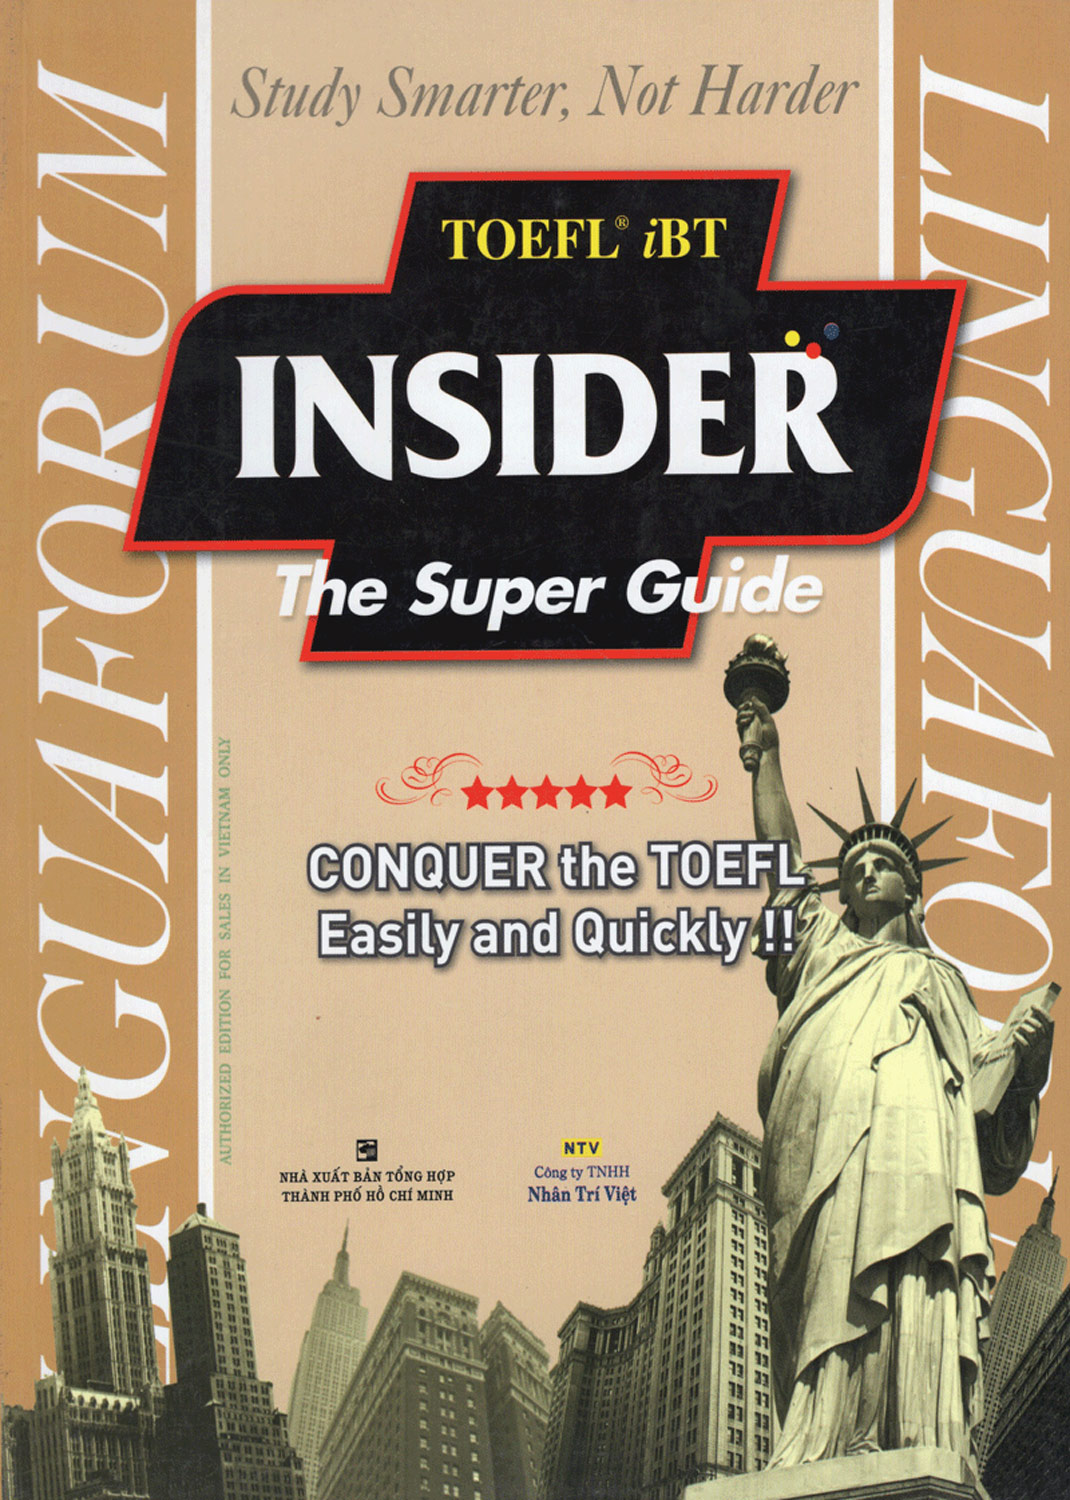 TOEFL iBT Insider The Super Guide